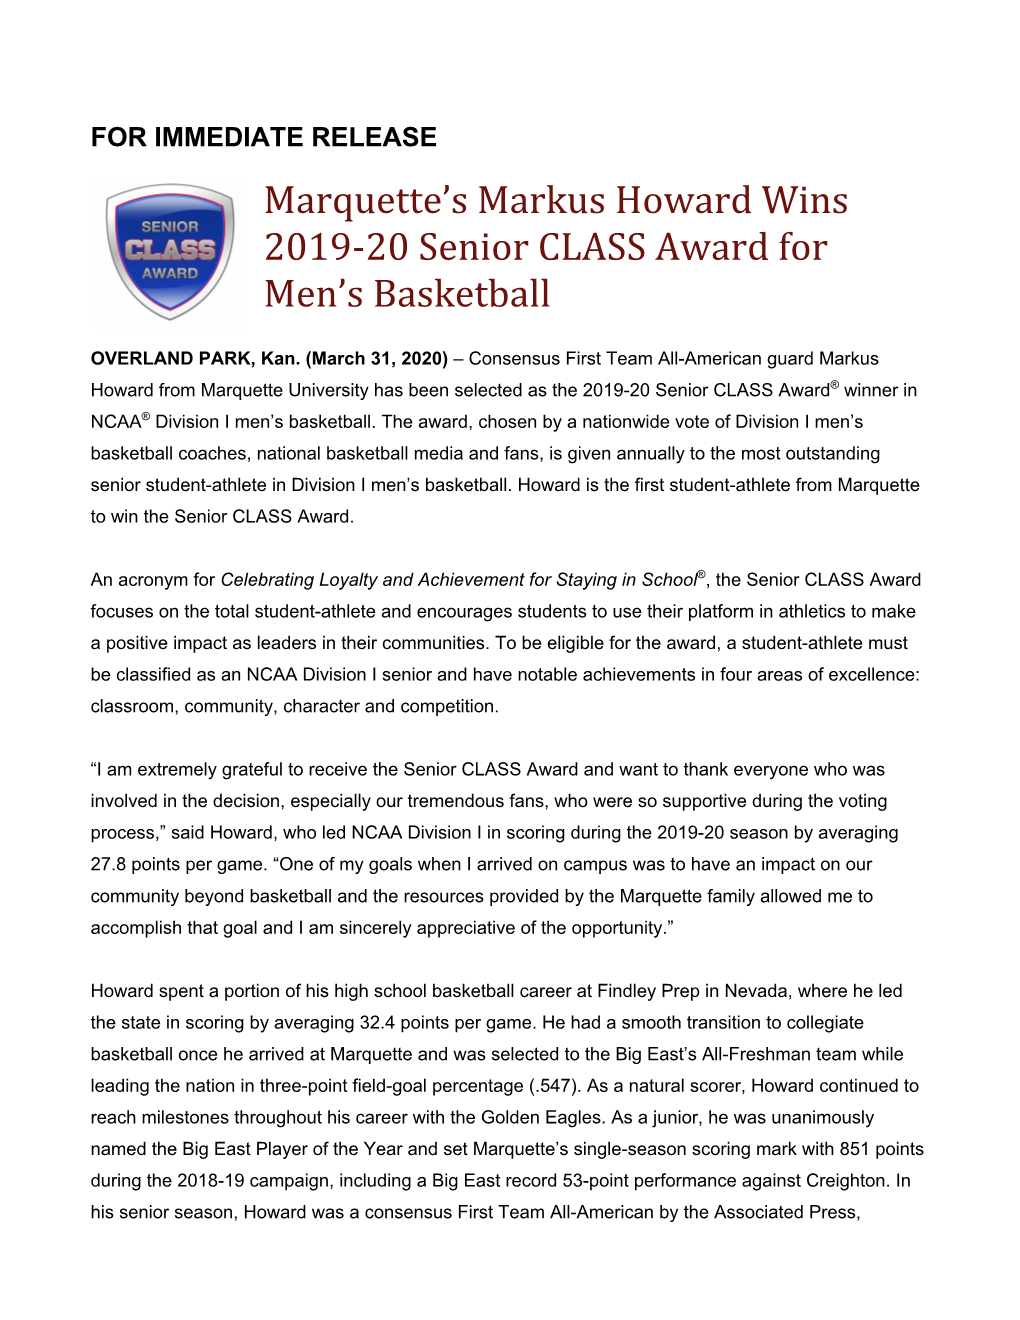 Marquette's Markus Howard Wins 2019-20 Senior CLASS Award For